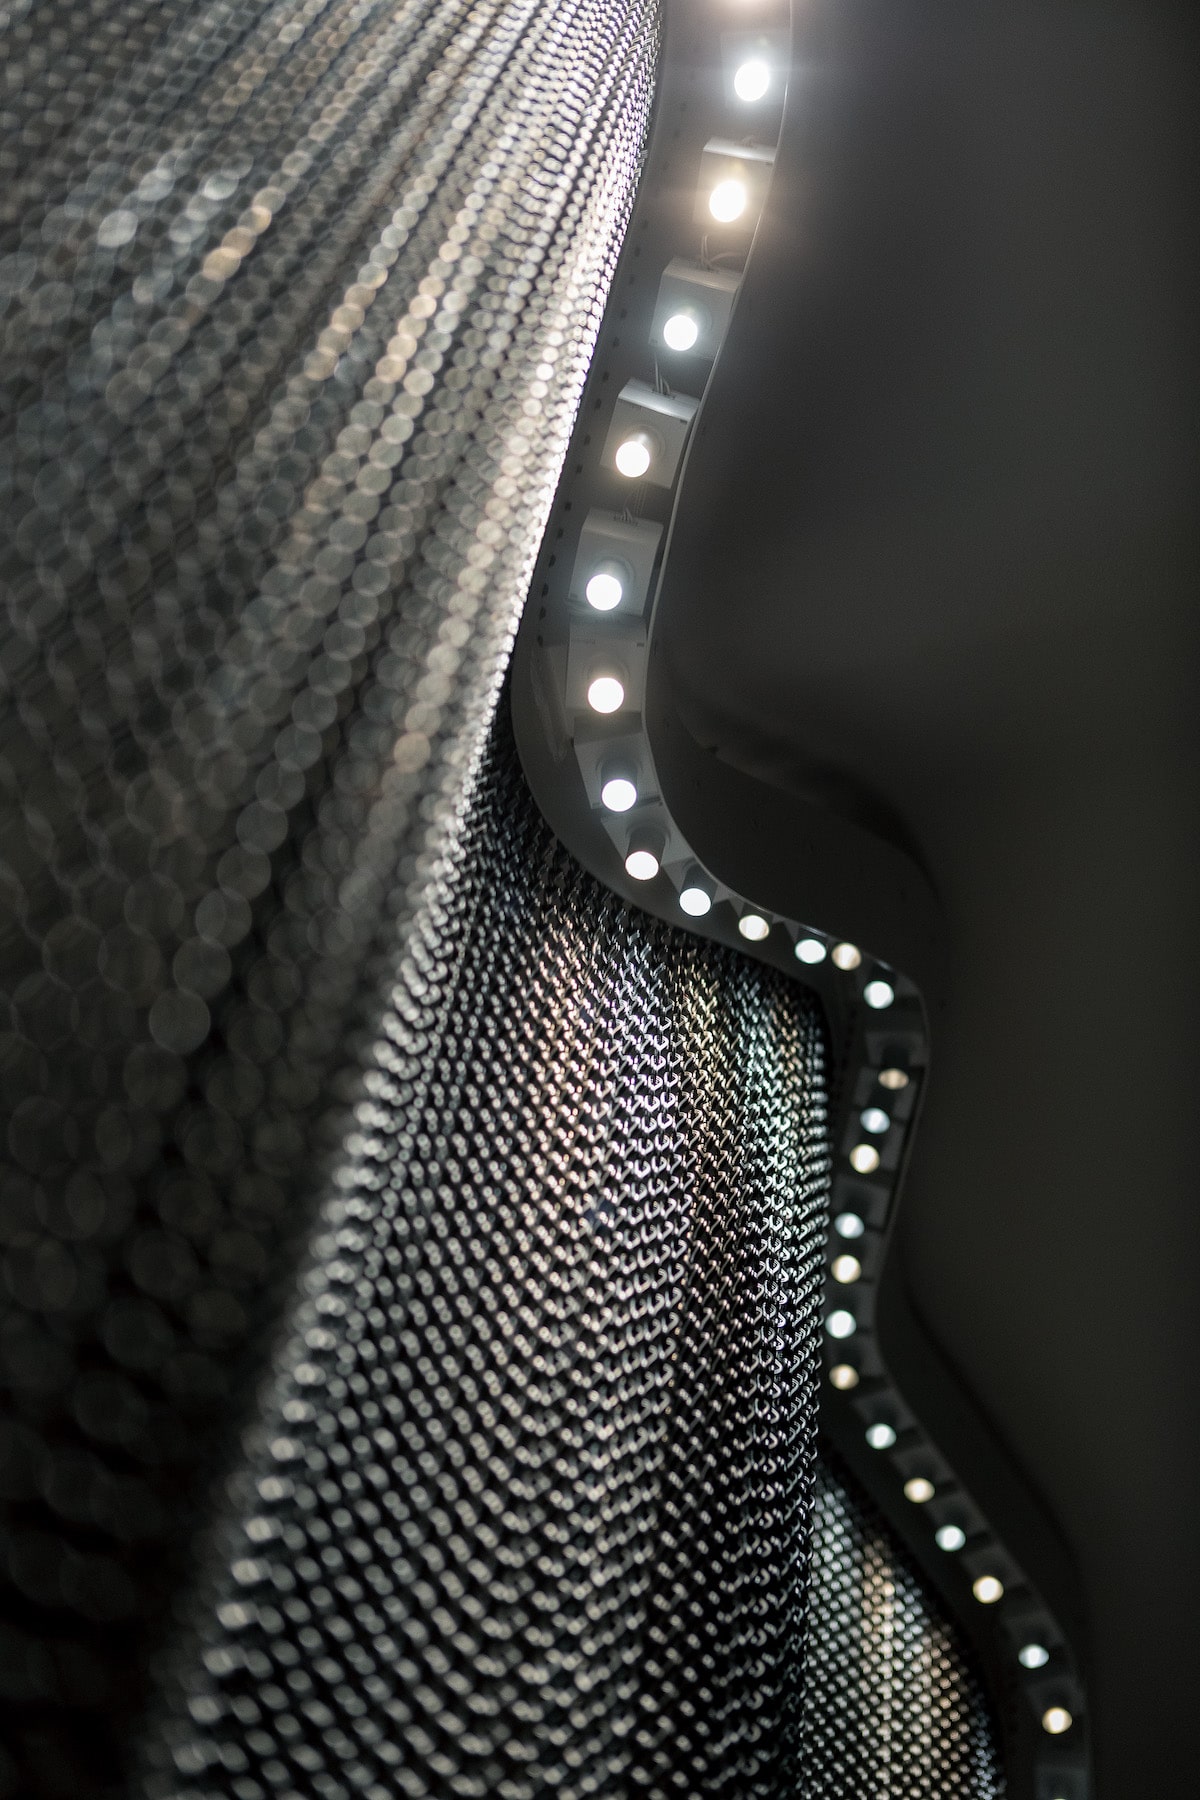 detalle de la escalera de cadenas diseñada pr Kengo Kuma para la Casa Batlló de antoni gaudi